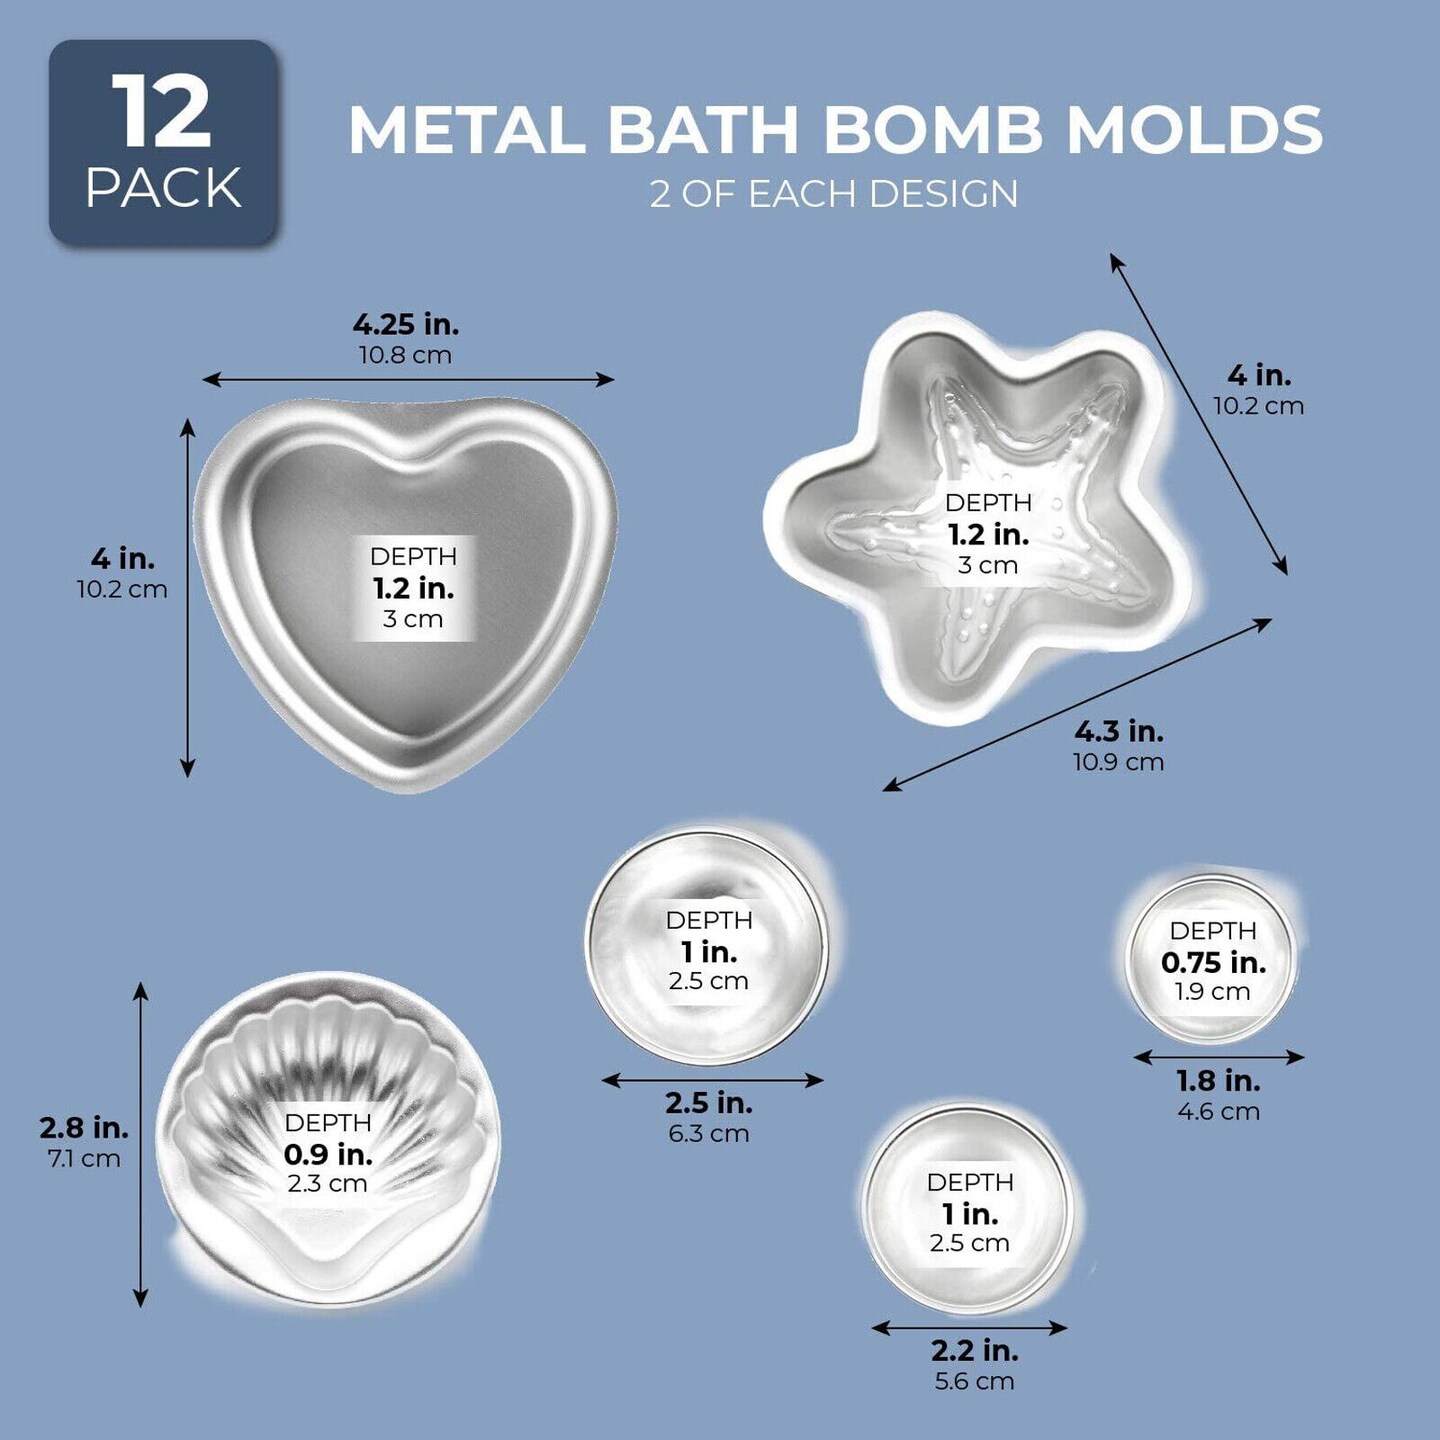 Metal Bath Bomb Molds for Bath Bomb 12 packs